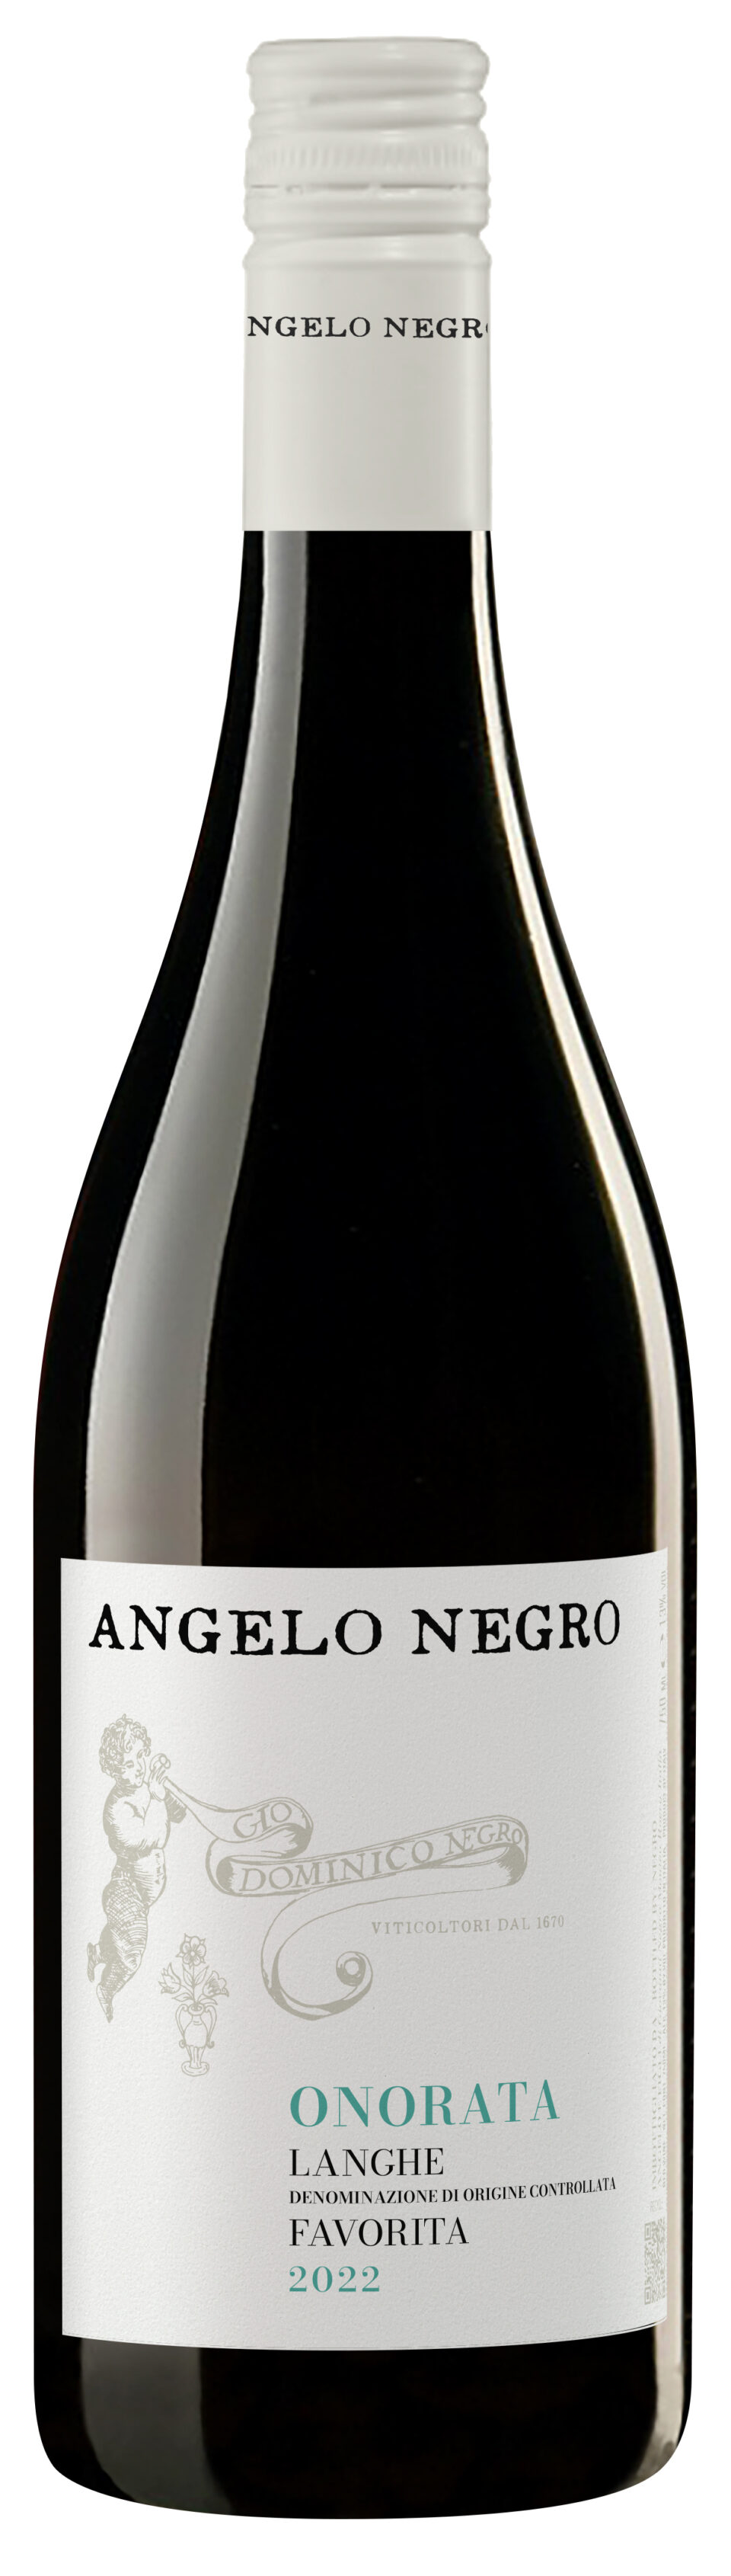 Angelo Negro Onorata Favorita 2022